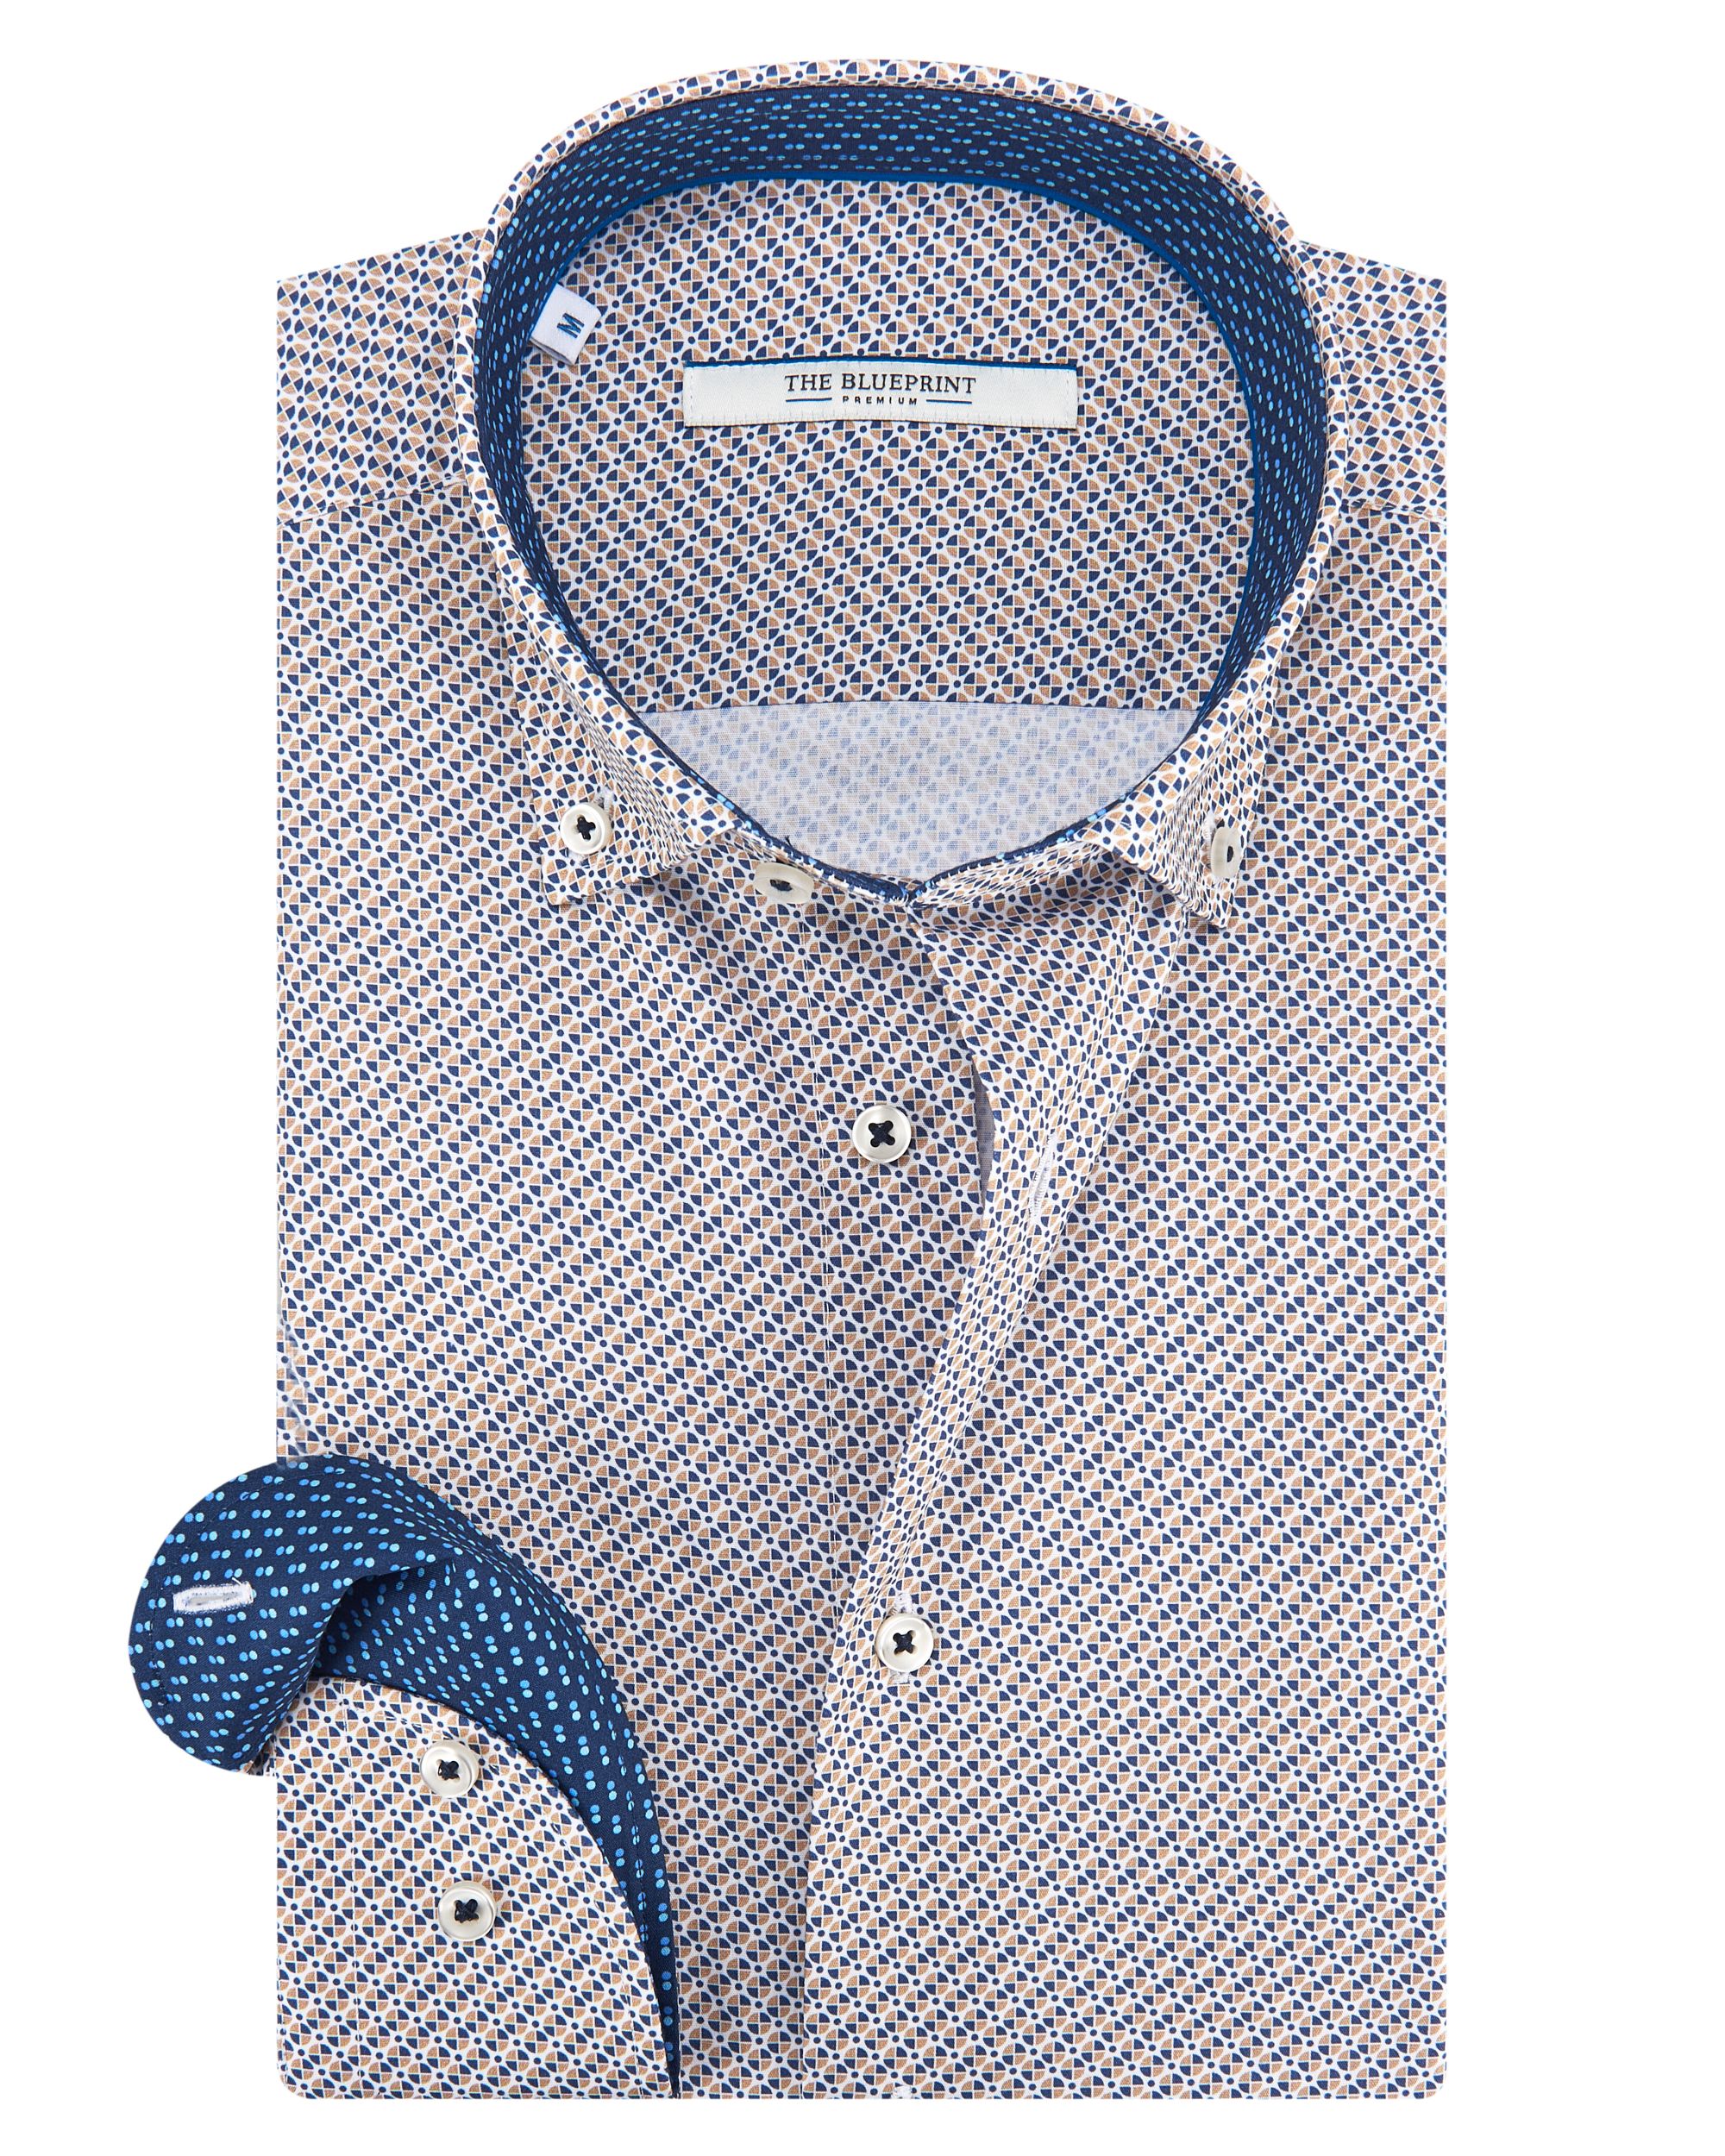 The BLUEPRINT Premium Casual Overhemd LM Blauw dessin 082215-001-L